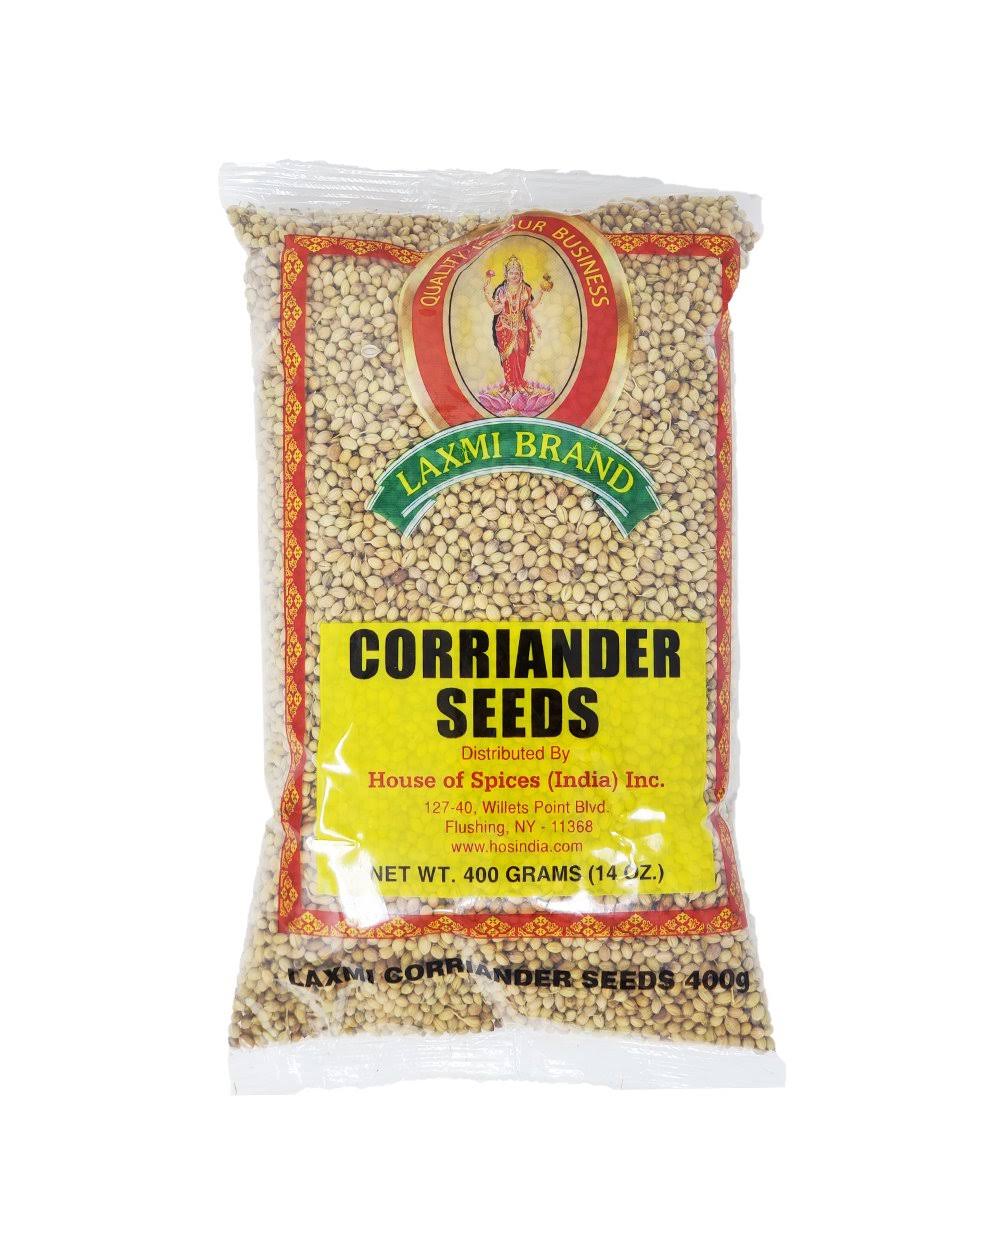 Laxmi Brand Coriander Seed 400gm